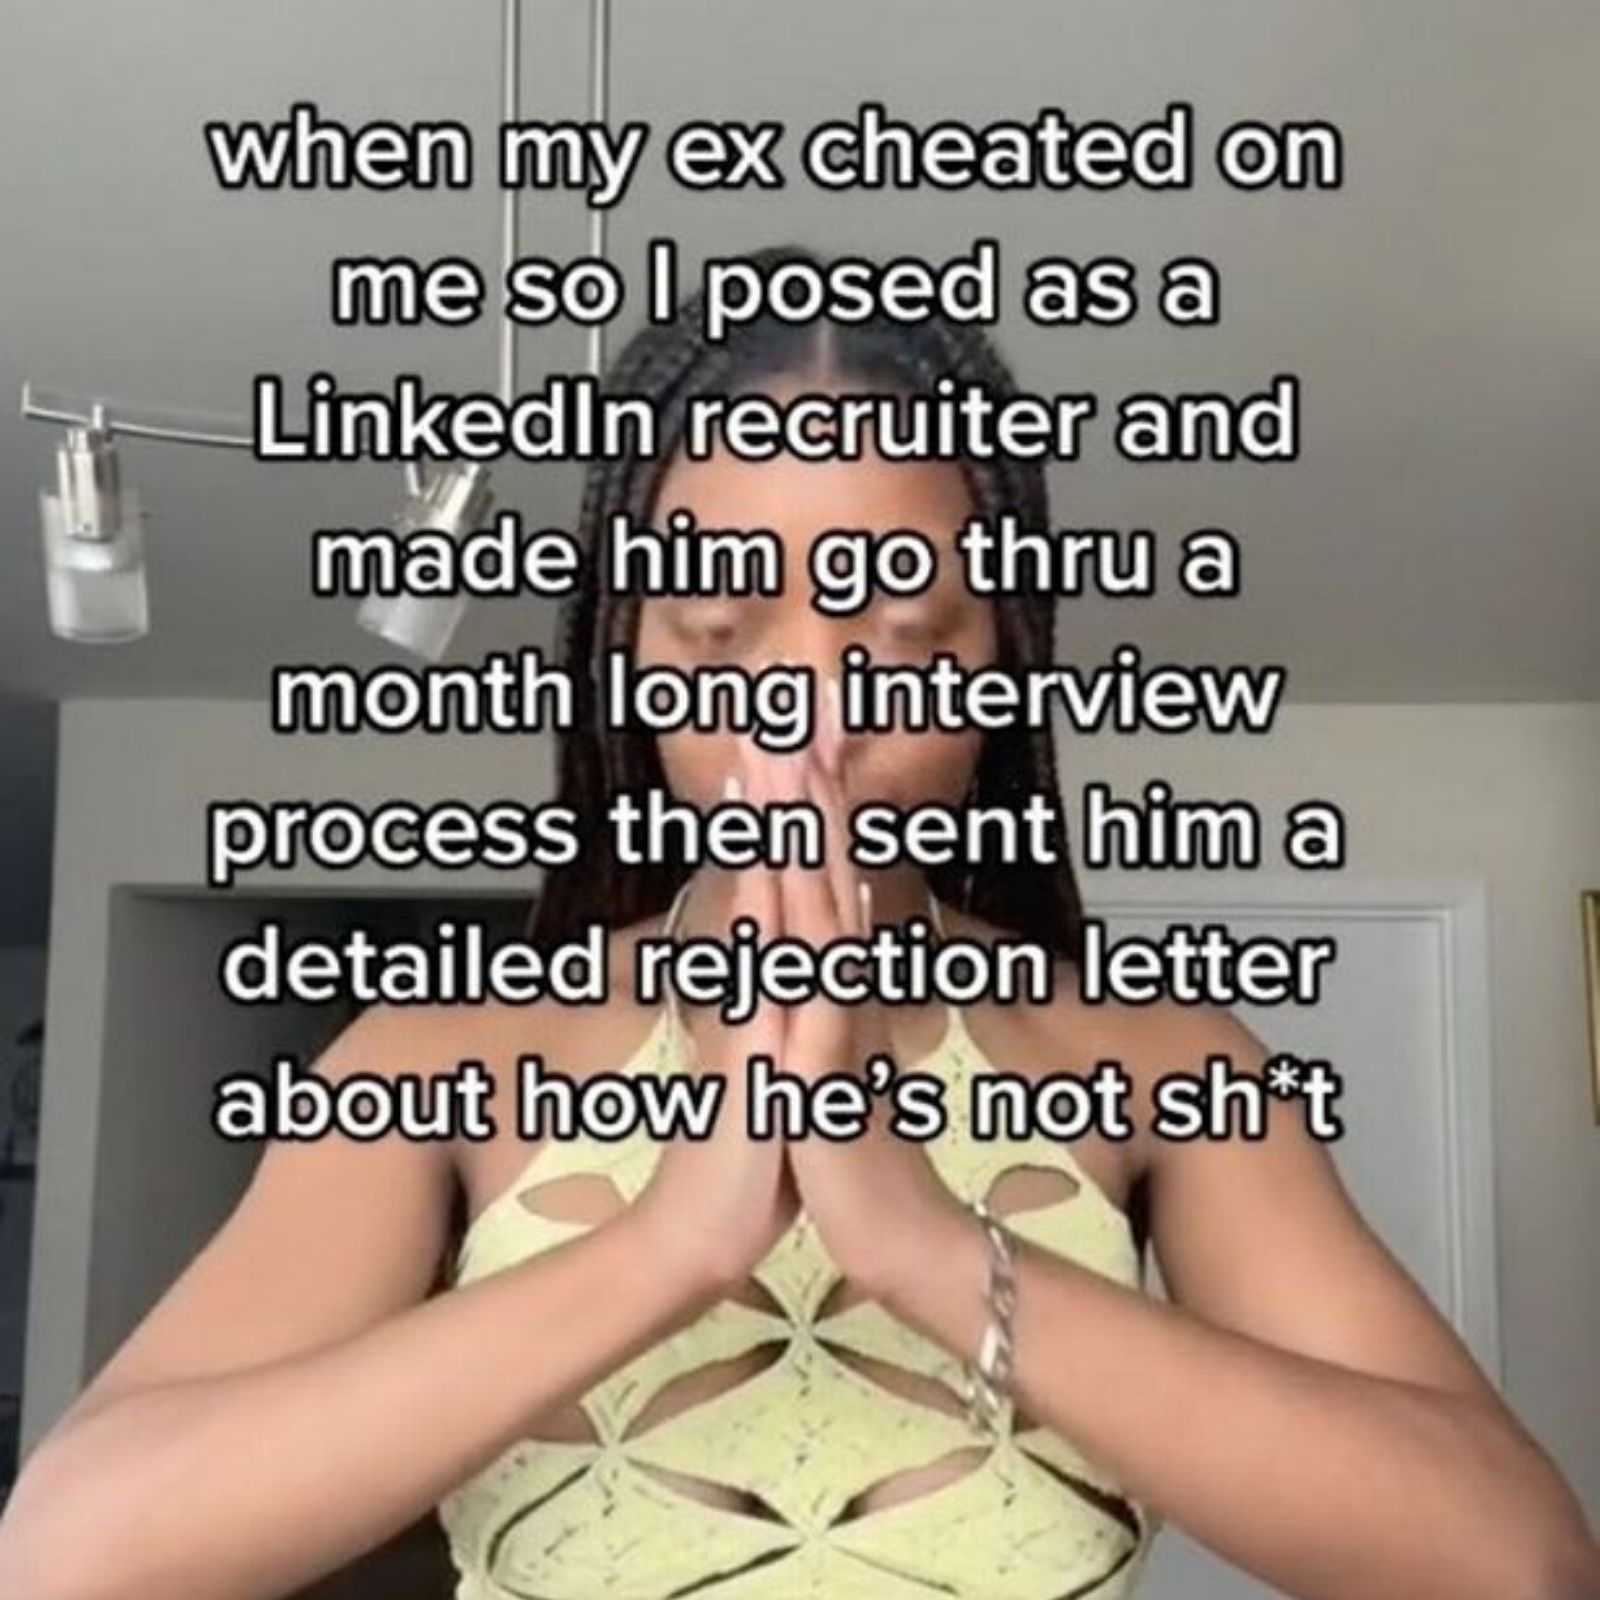 woman took revenge from cheating boyfriend